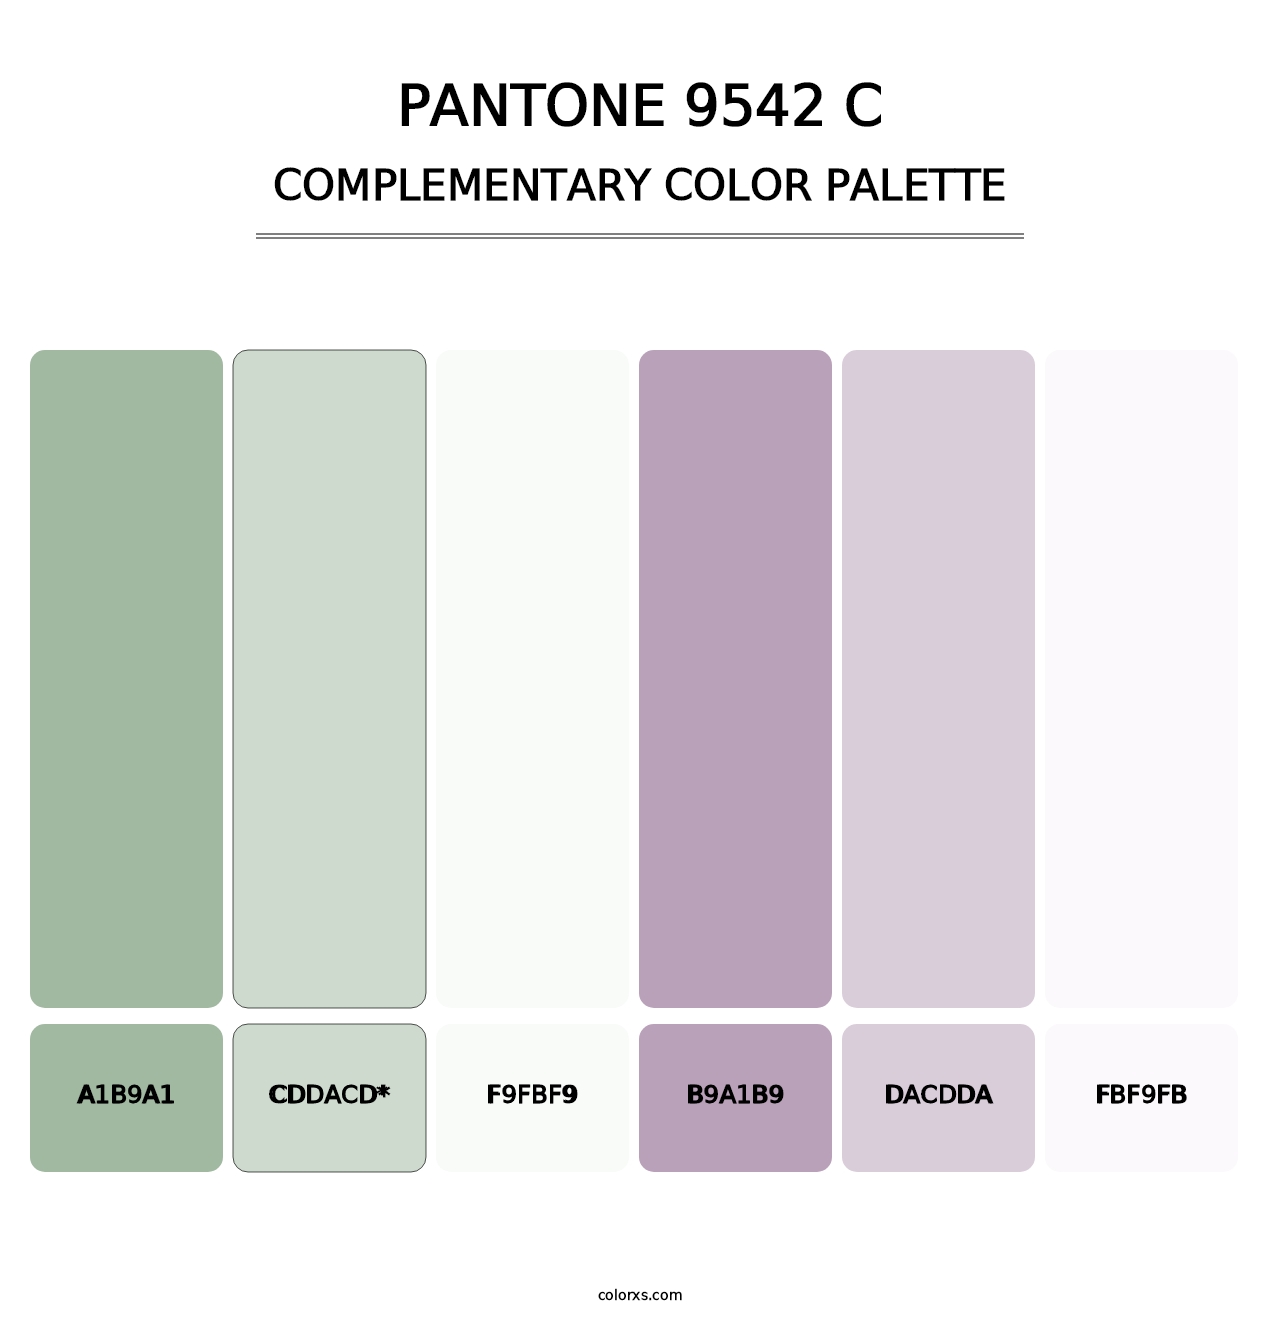 PANTONE 9542 C - Complementary Color Palette